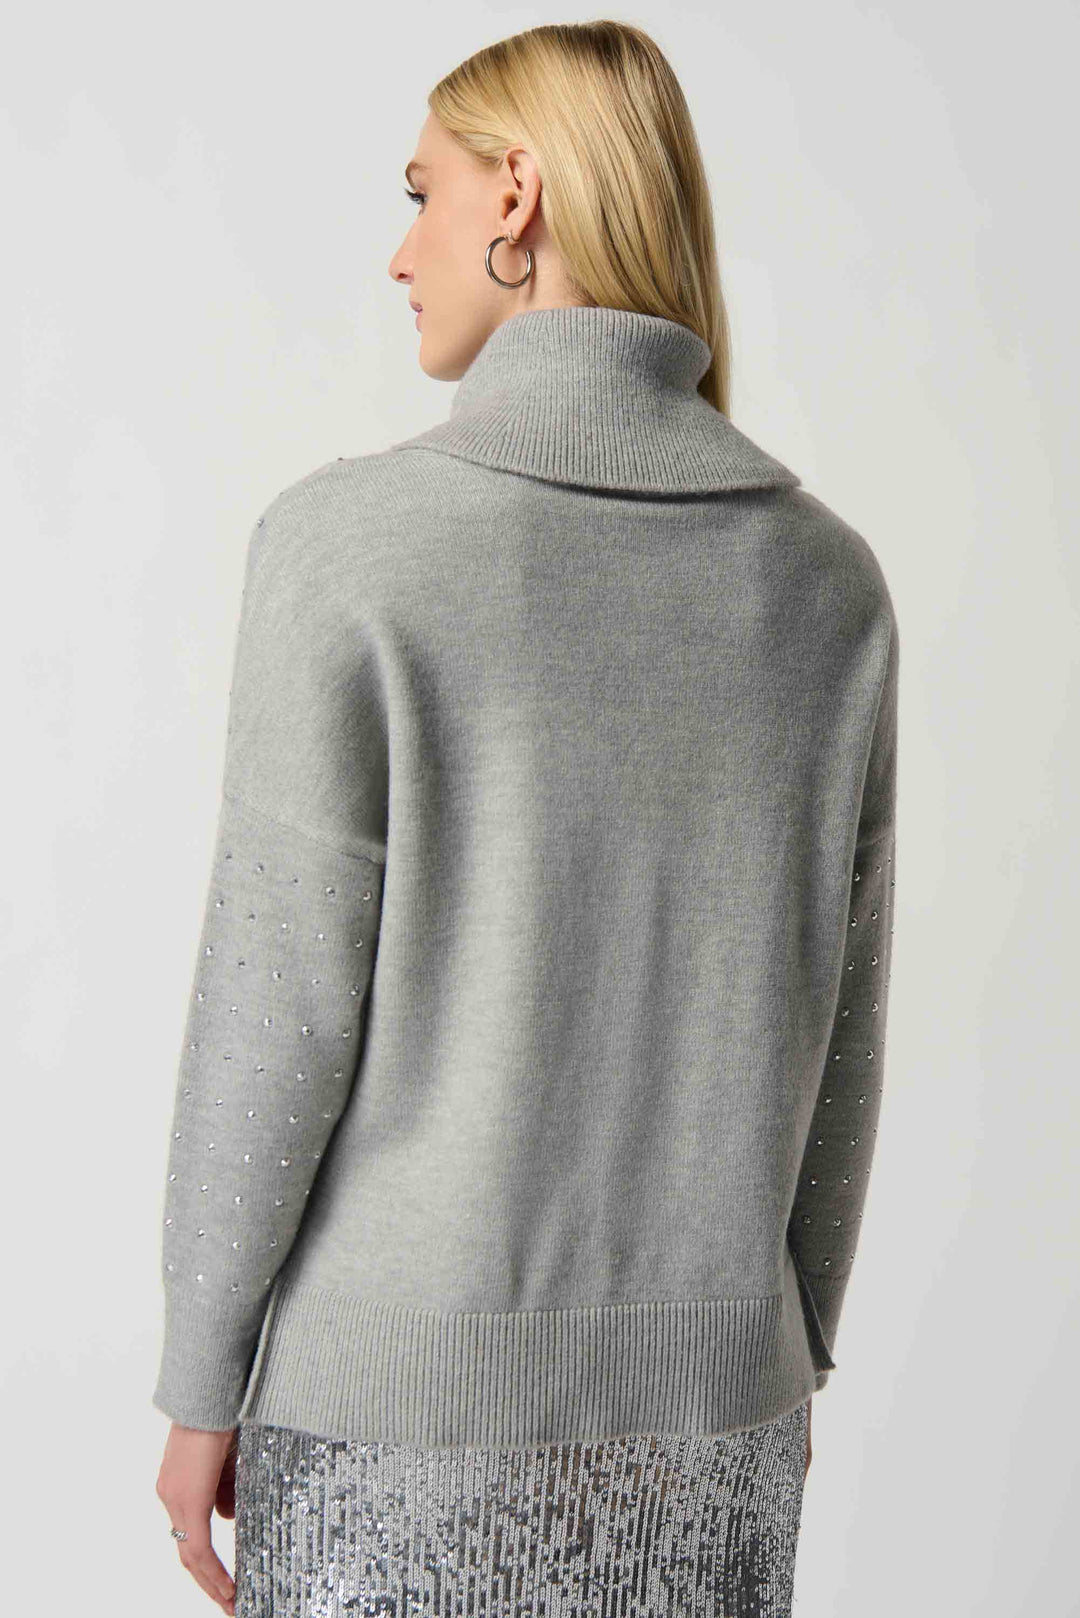 "Joseph Ribkoff Light Grey Mélange Cowl Neck Sweater Style 234909"